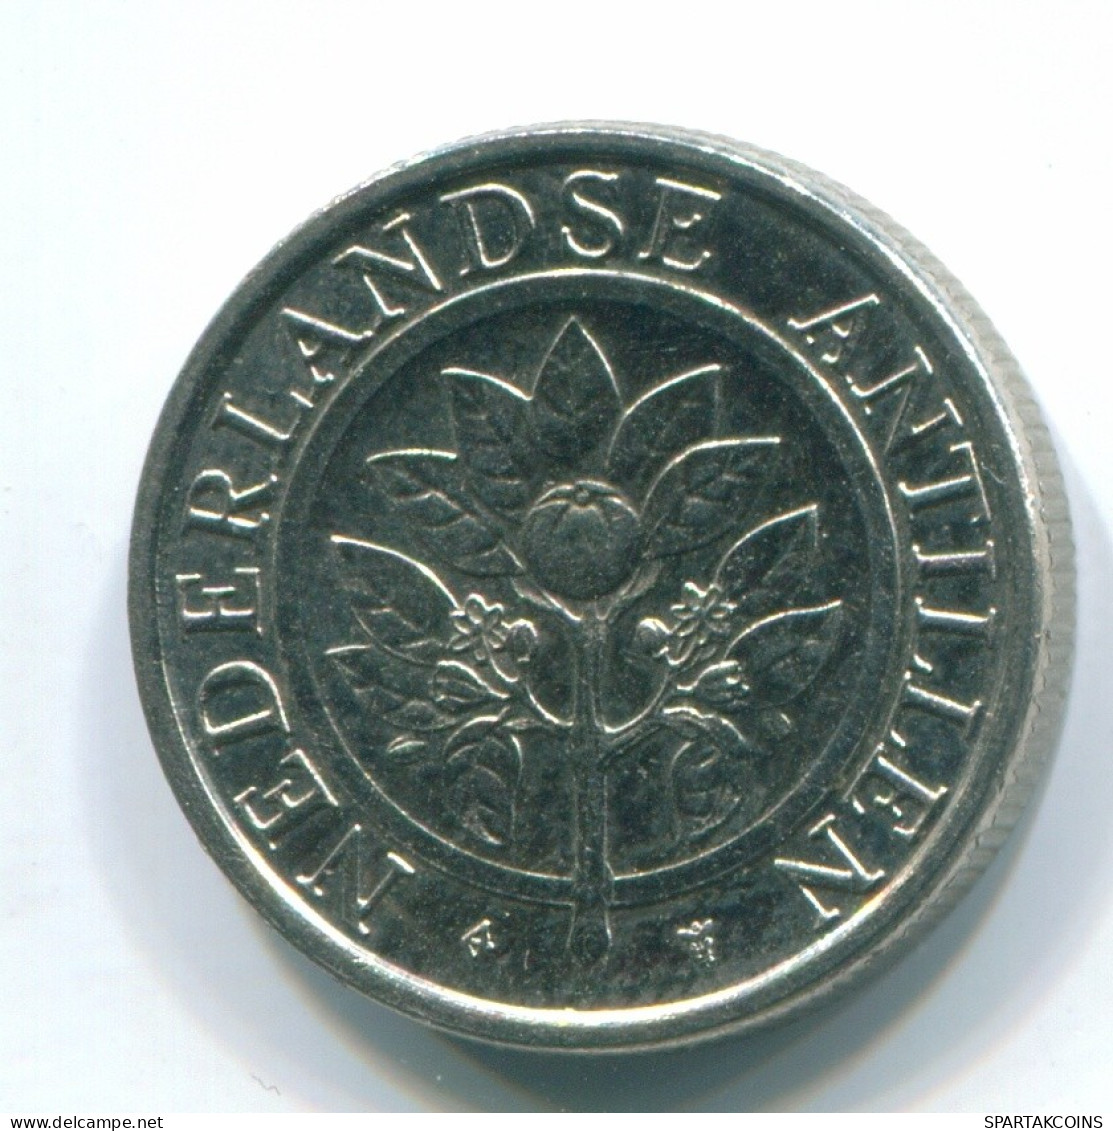 10 CENTS 1989 NETHERLANDS ANTILLES Nickel Colonial Coin #S11317.U.A - Antilles Néerlandaises